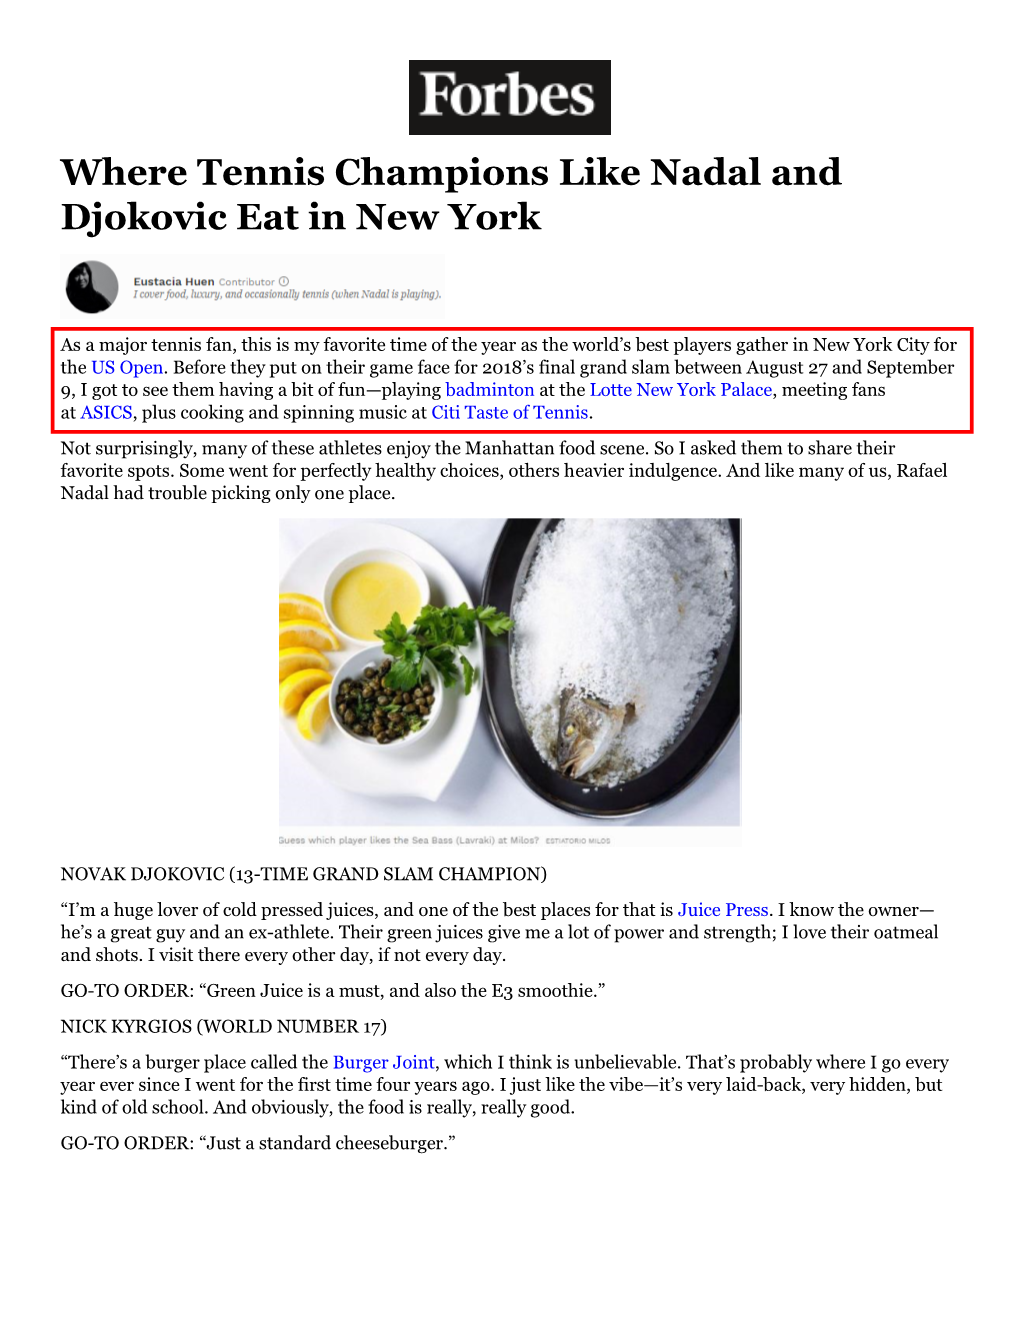 Where Tennis Champions Like Nadal and Djokovic Eat in New York